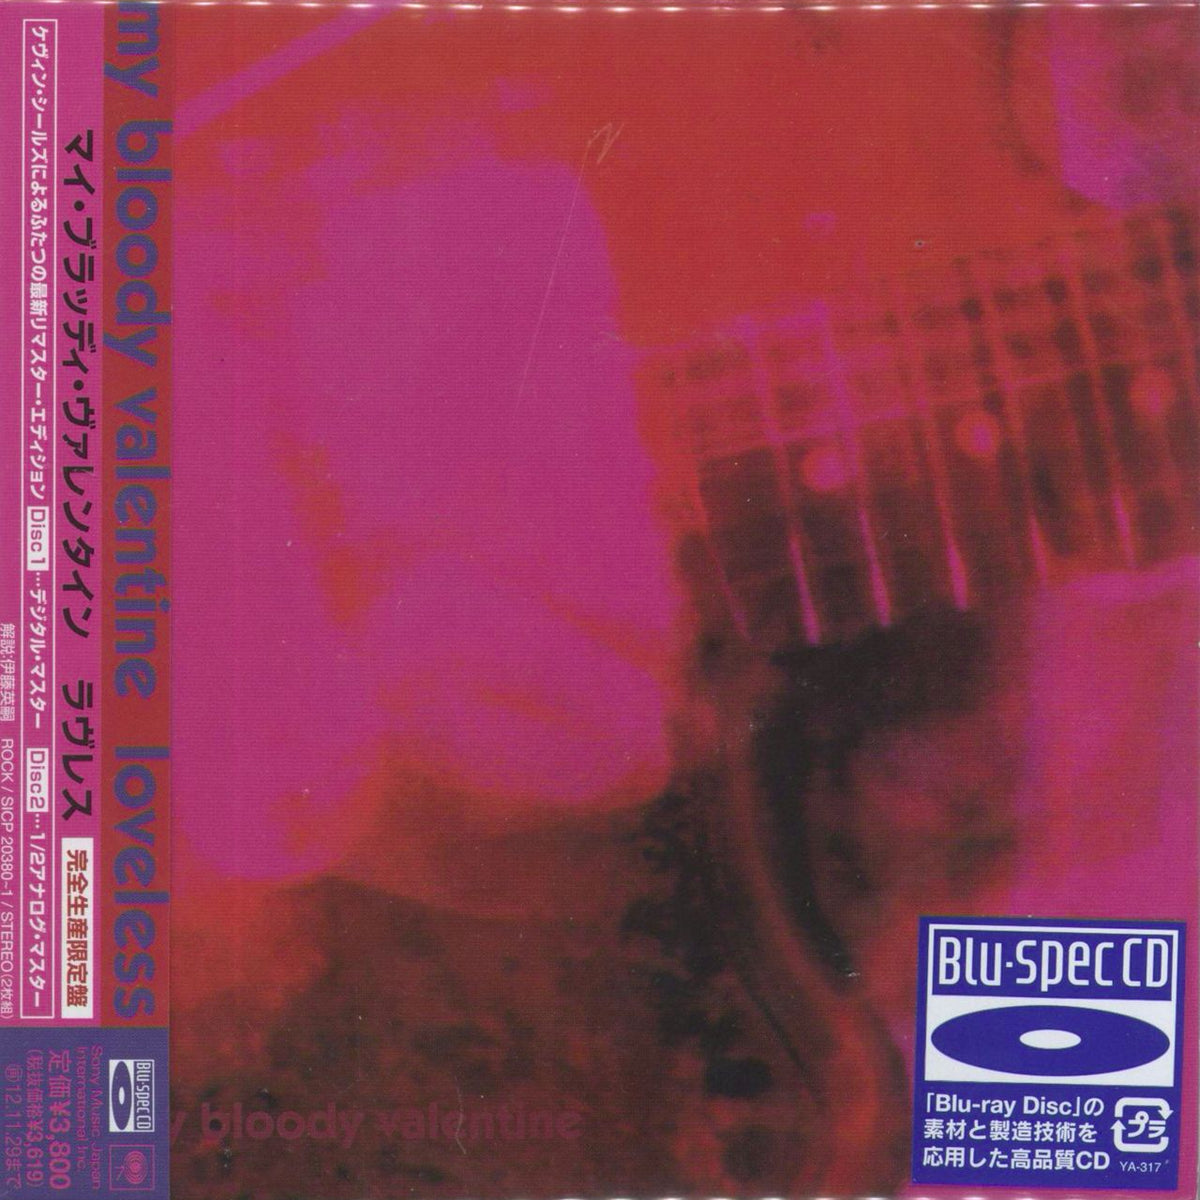 My Bloody Valentine Loveless - Blu Spec Japanese 2-CD album set 